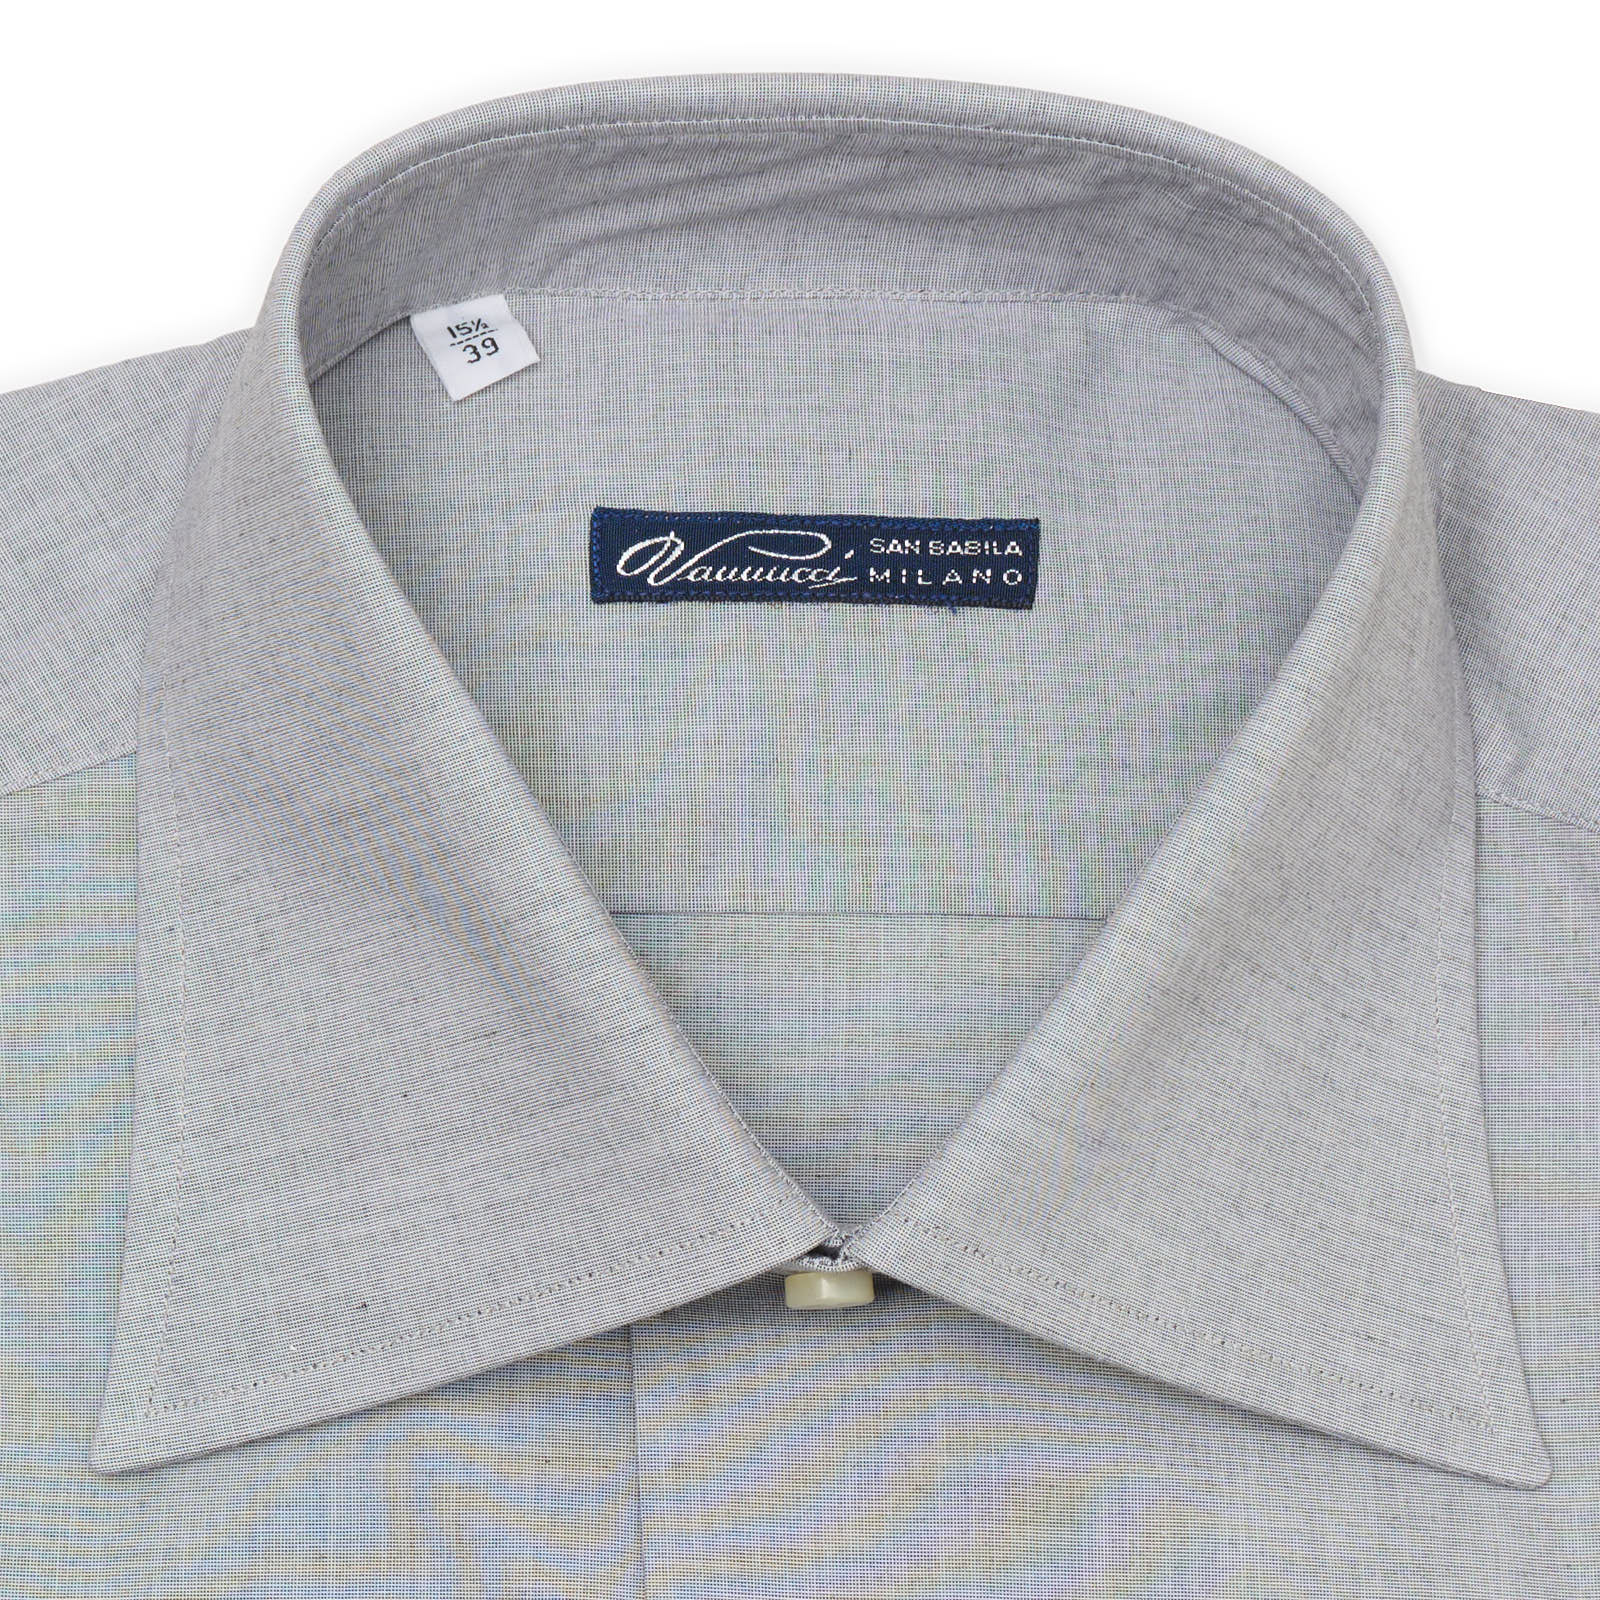 VANNUCCI Milano Light Gray Cotton Dress Shirt EU 39 NEW US 15.5